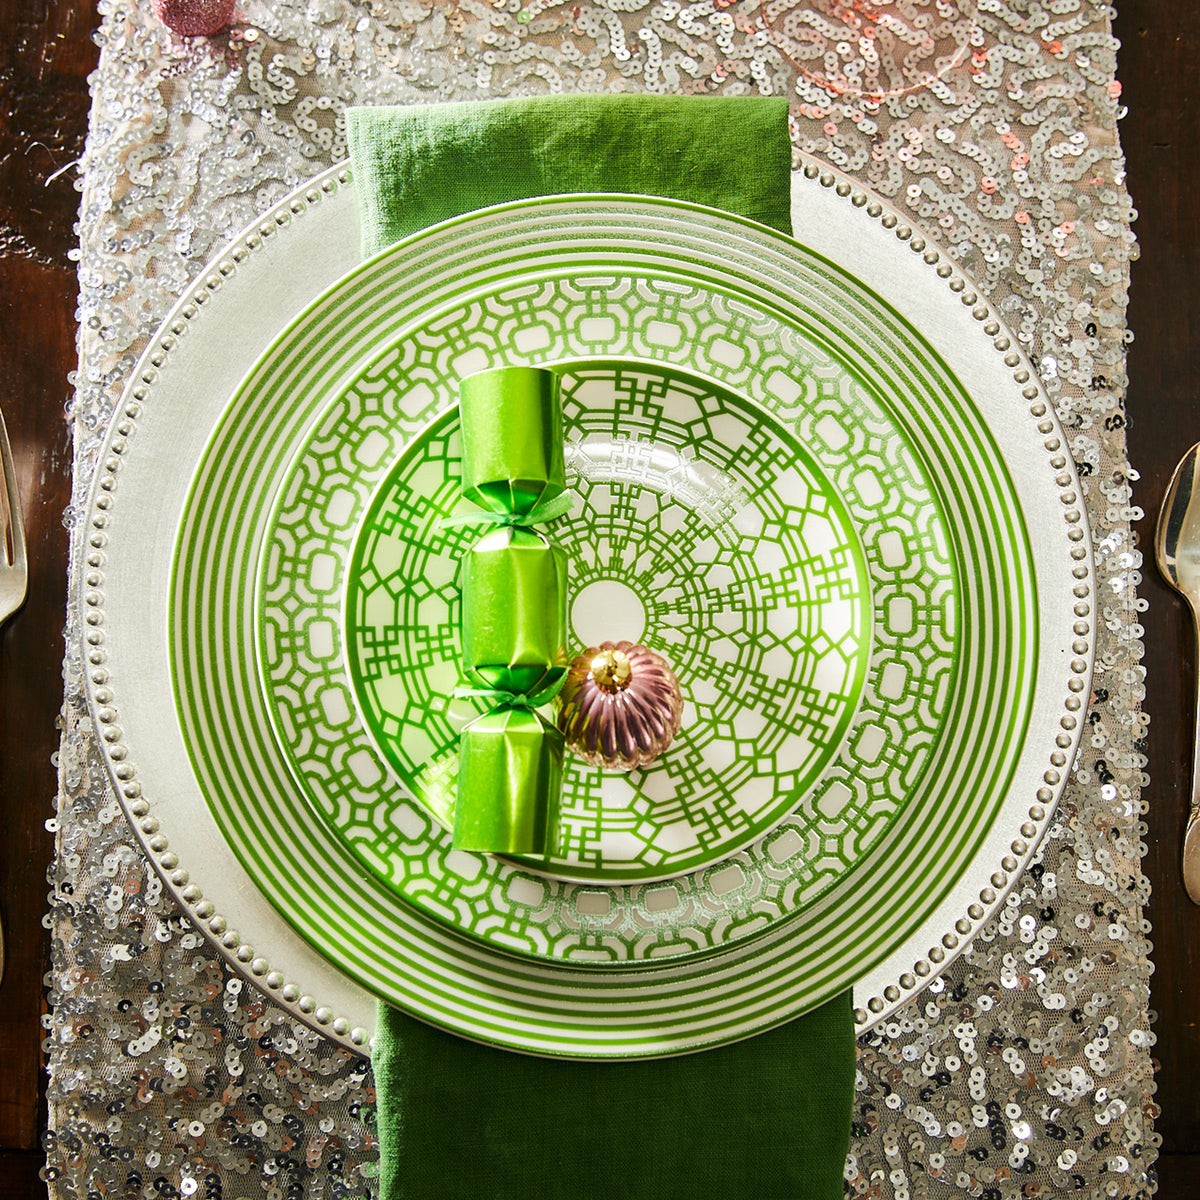 A Newport Stripe Green Rimmed Dinner Plate from Caskata Artisanal Home on a table.